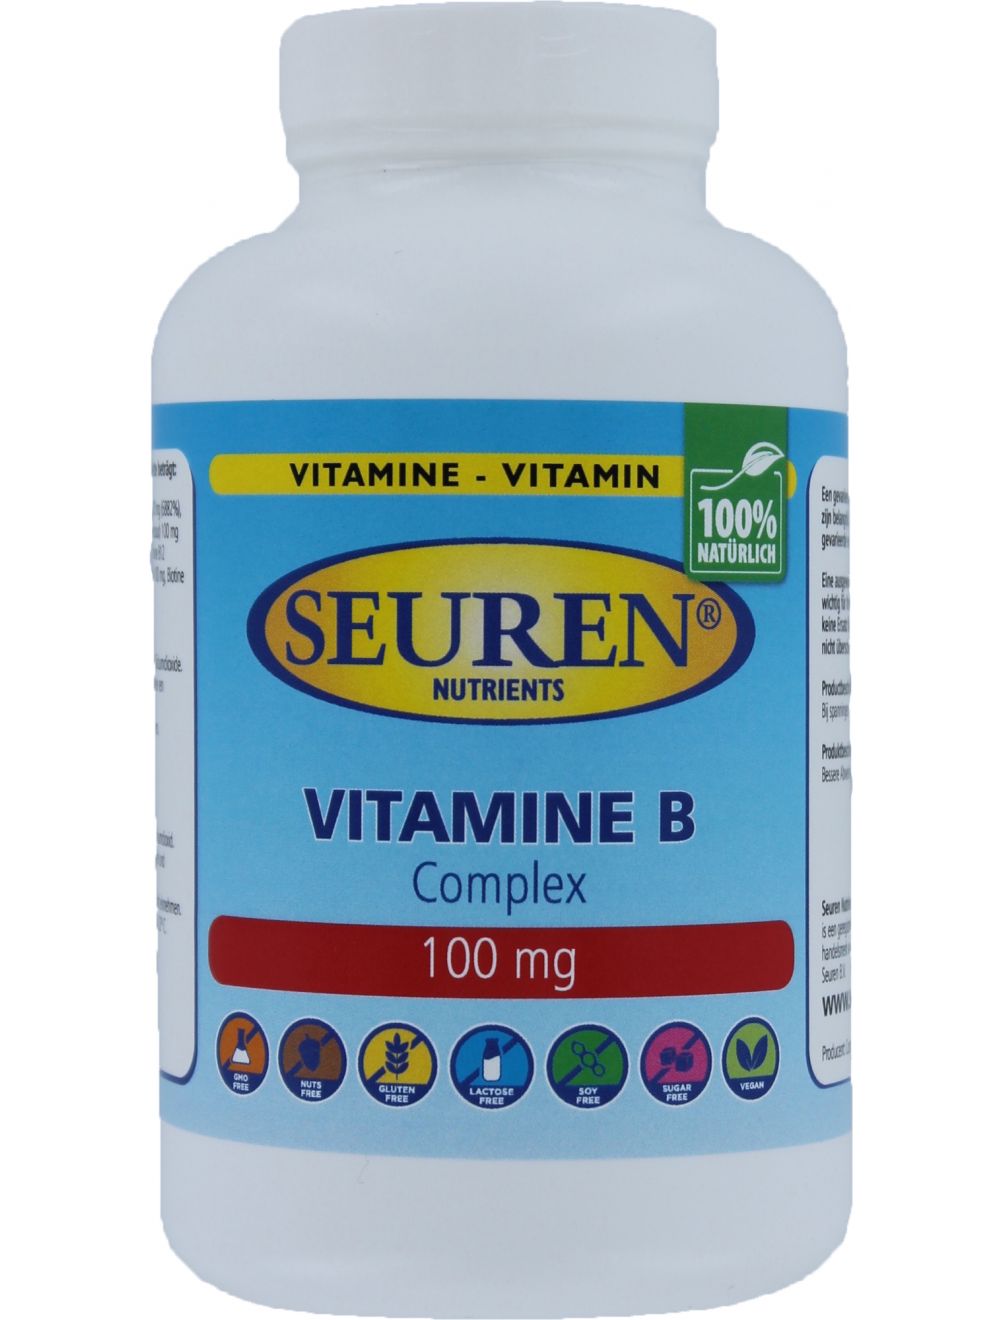 Seuren Nutrients Vitamine B complex 100 mg Health